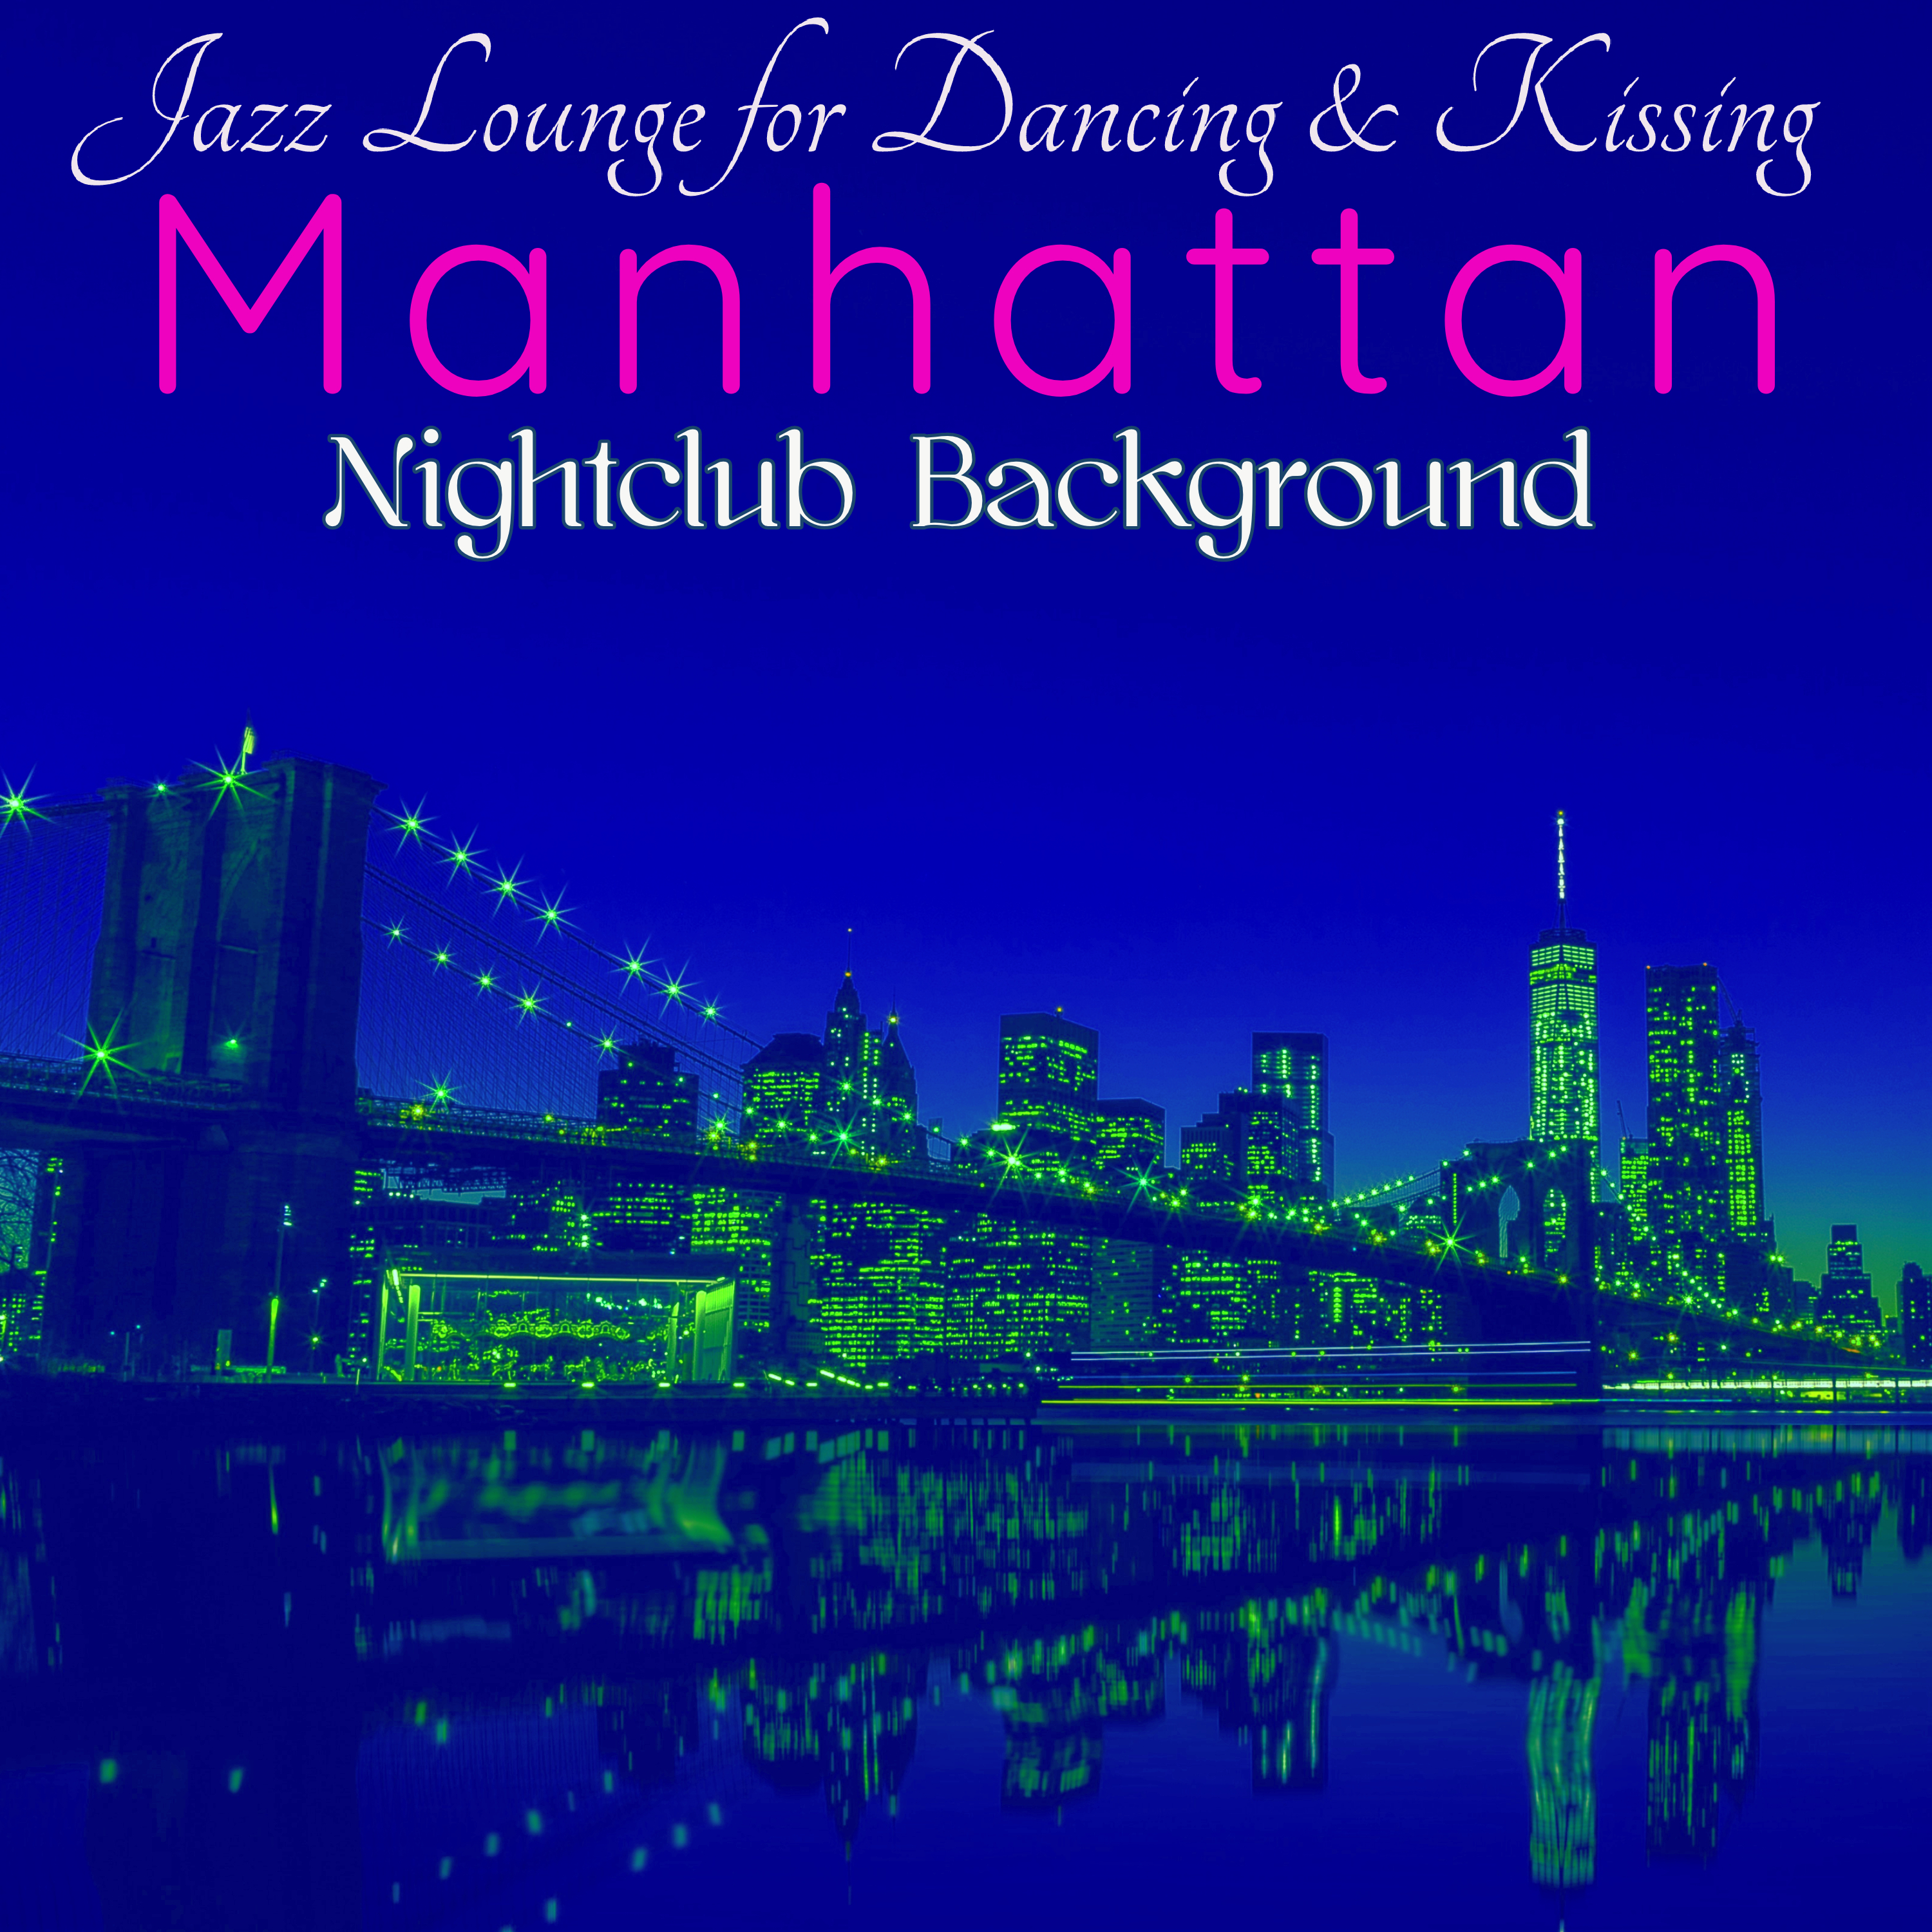 Manhattan Nightclub Background  Jazz Lounge for Dancing  Kissing